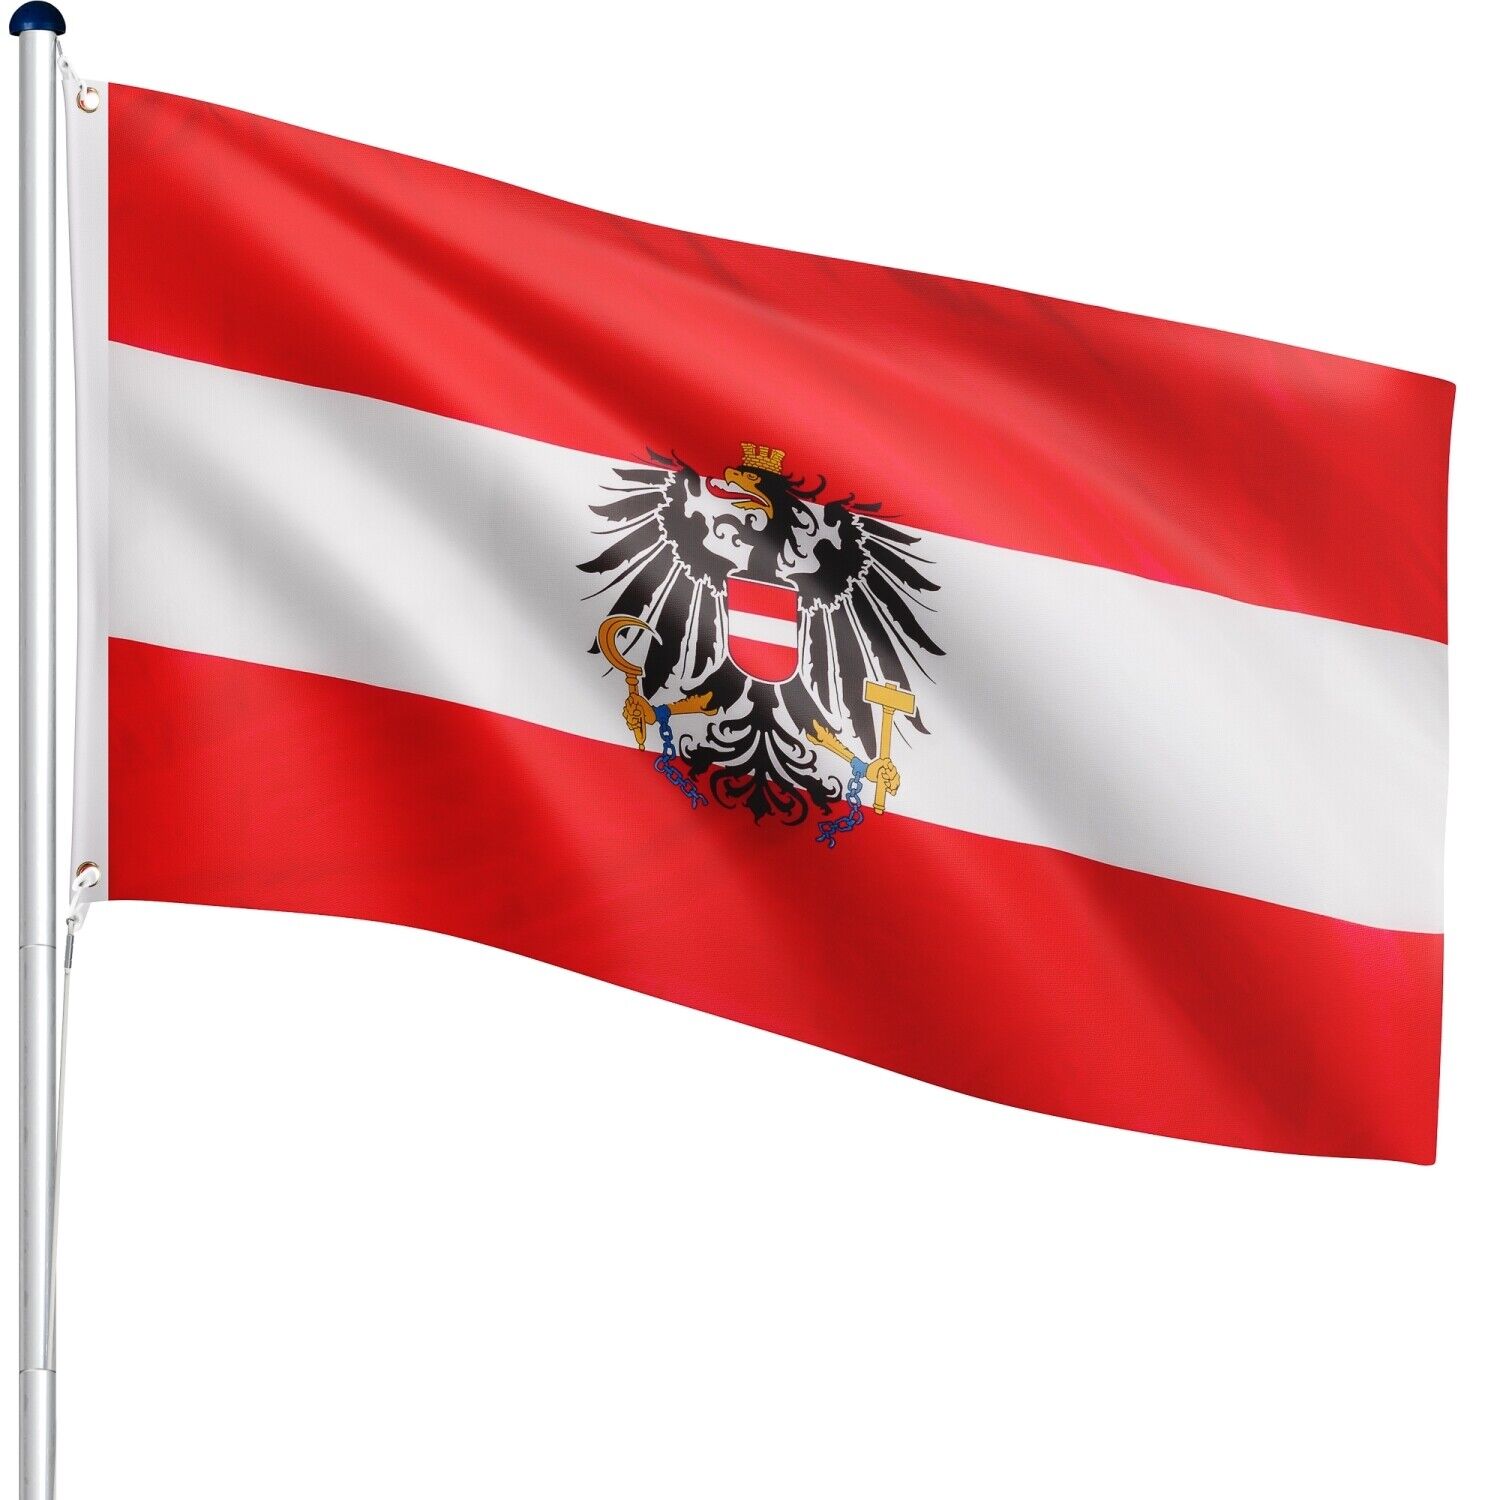 FLAGMASTER Aluminium Fahnenmast 6,5m Alu Flaggenmast Deutschland Fahne Flagge